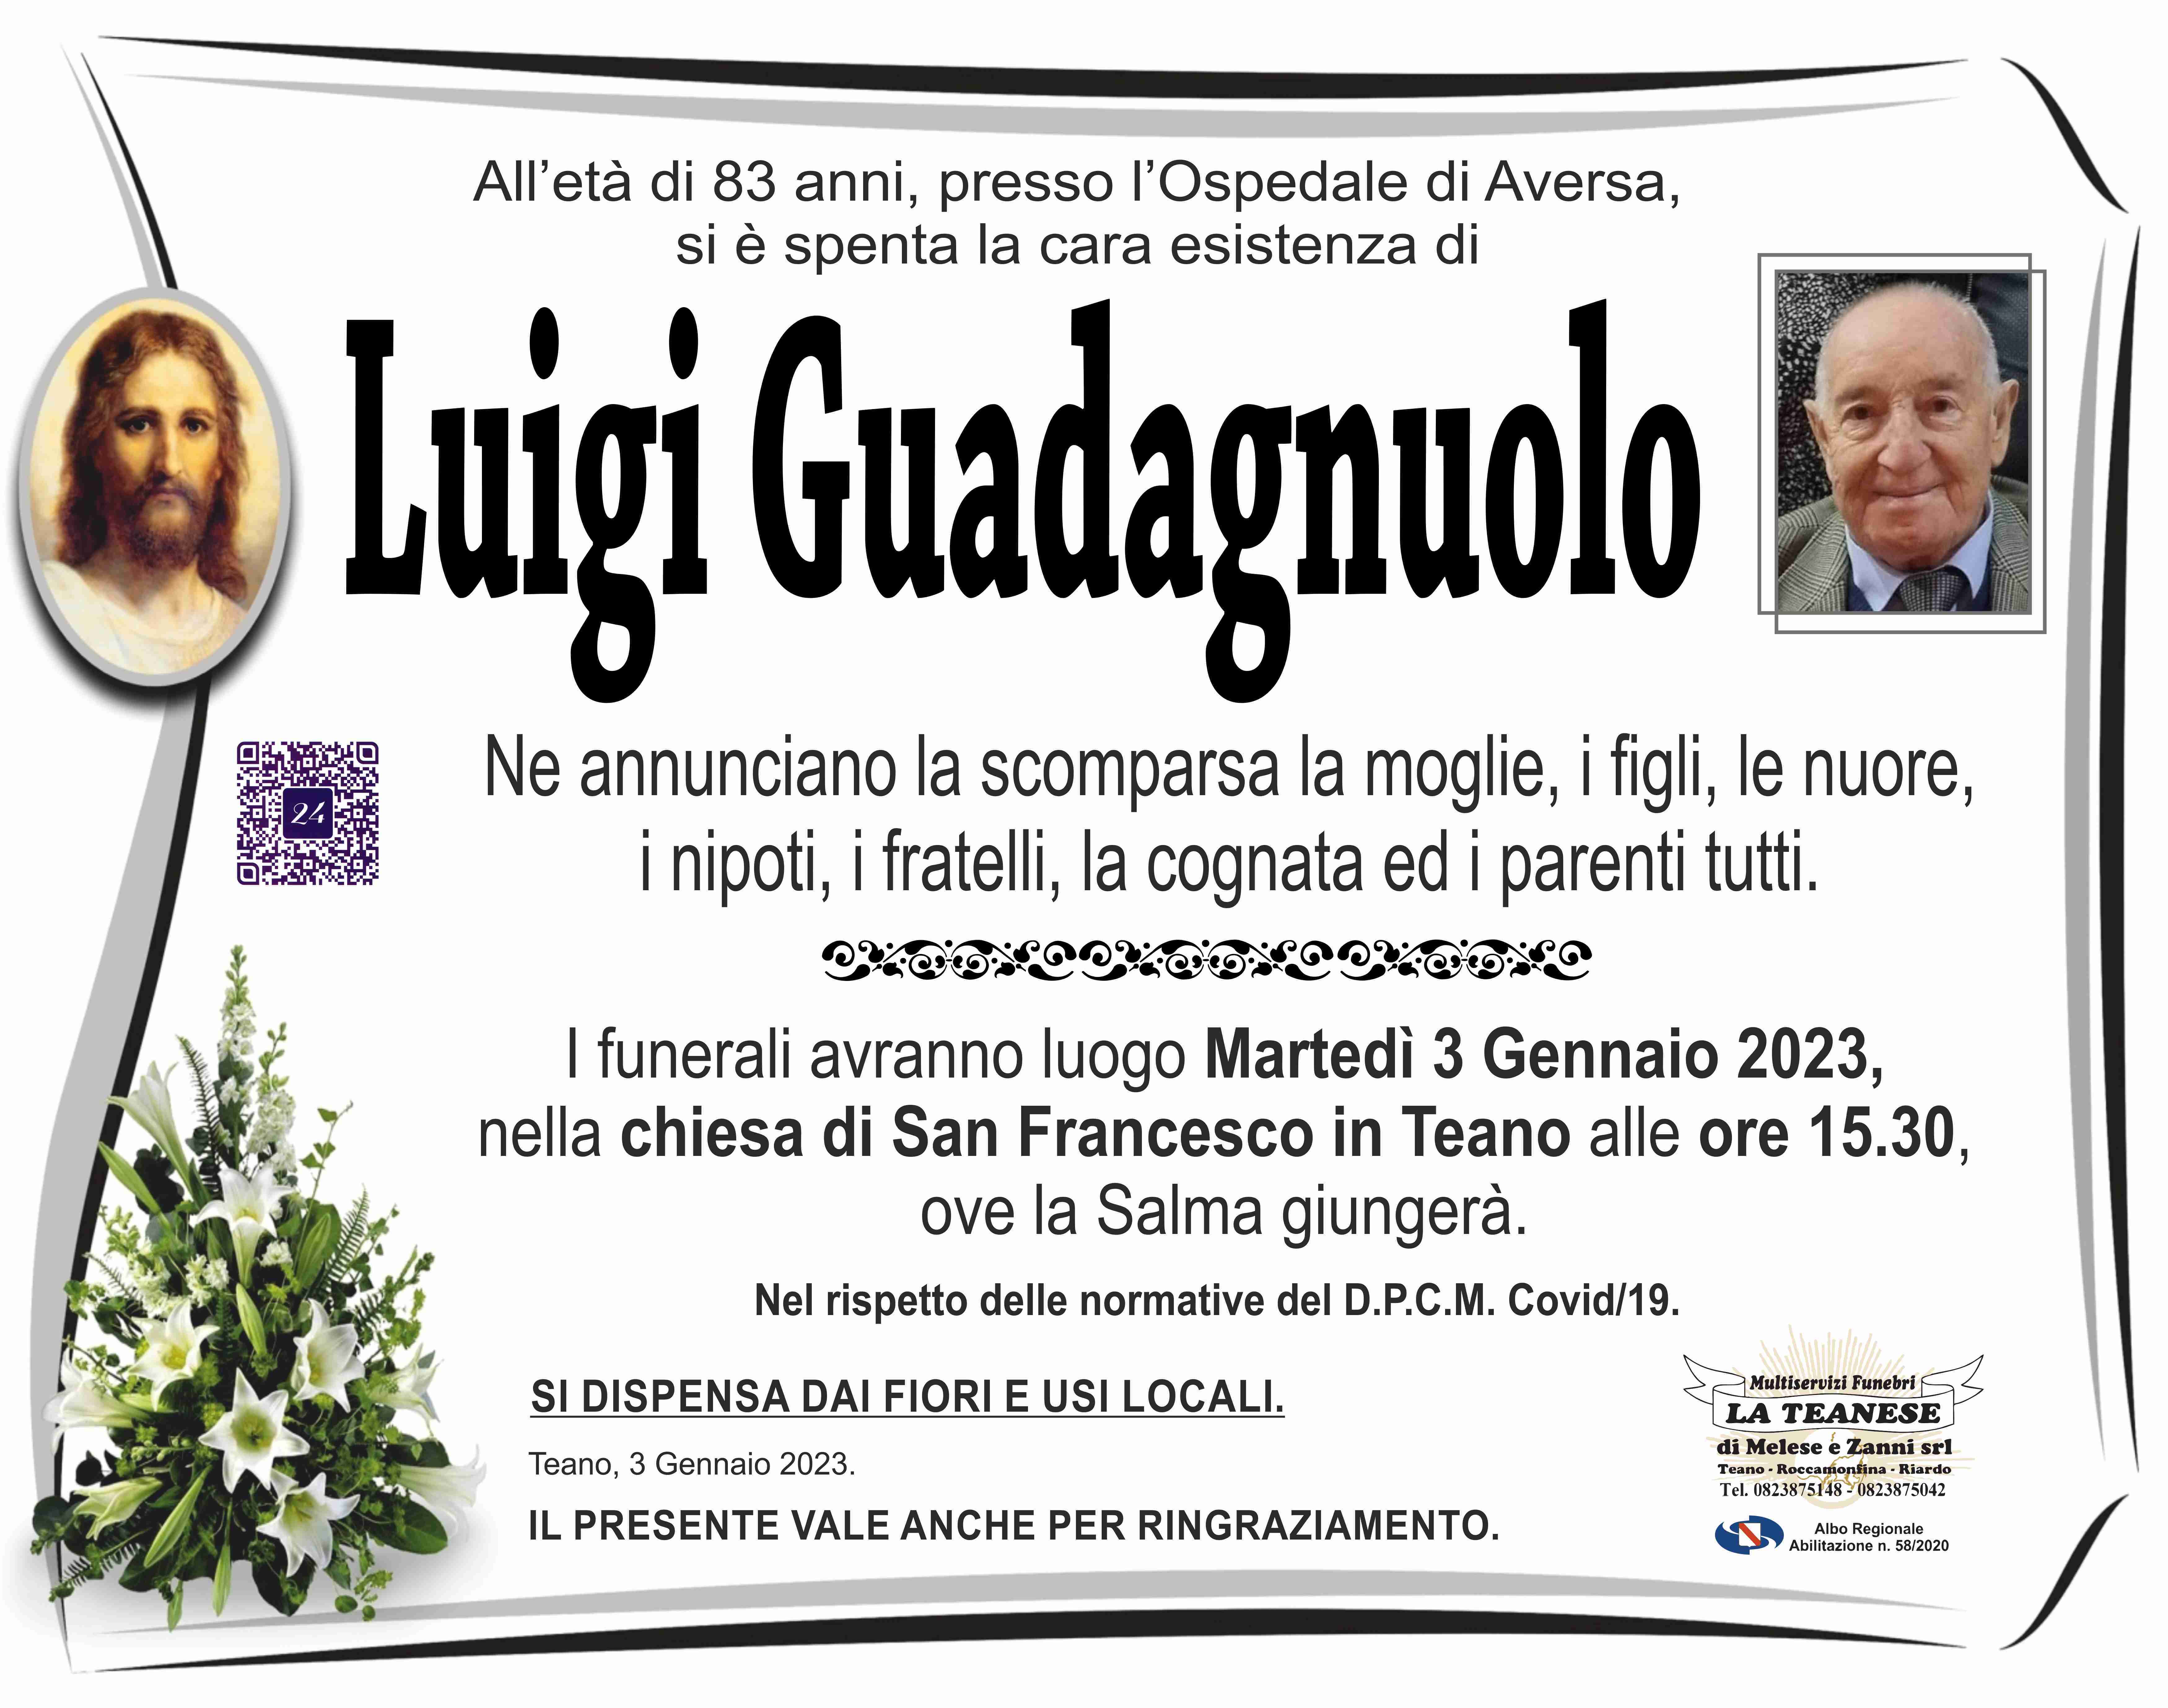 Luigi Guadagnuolo